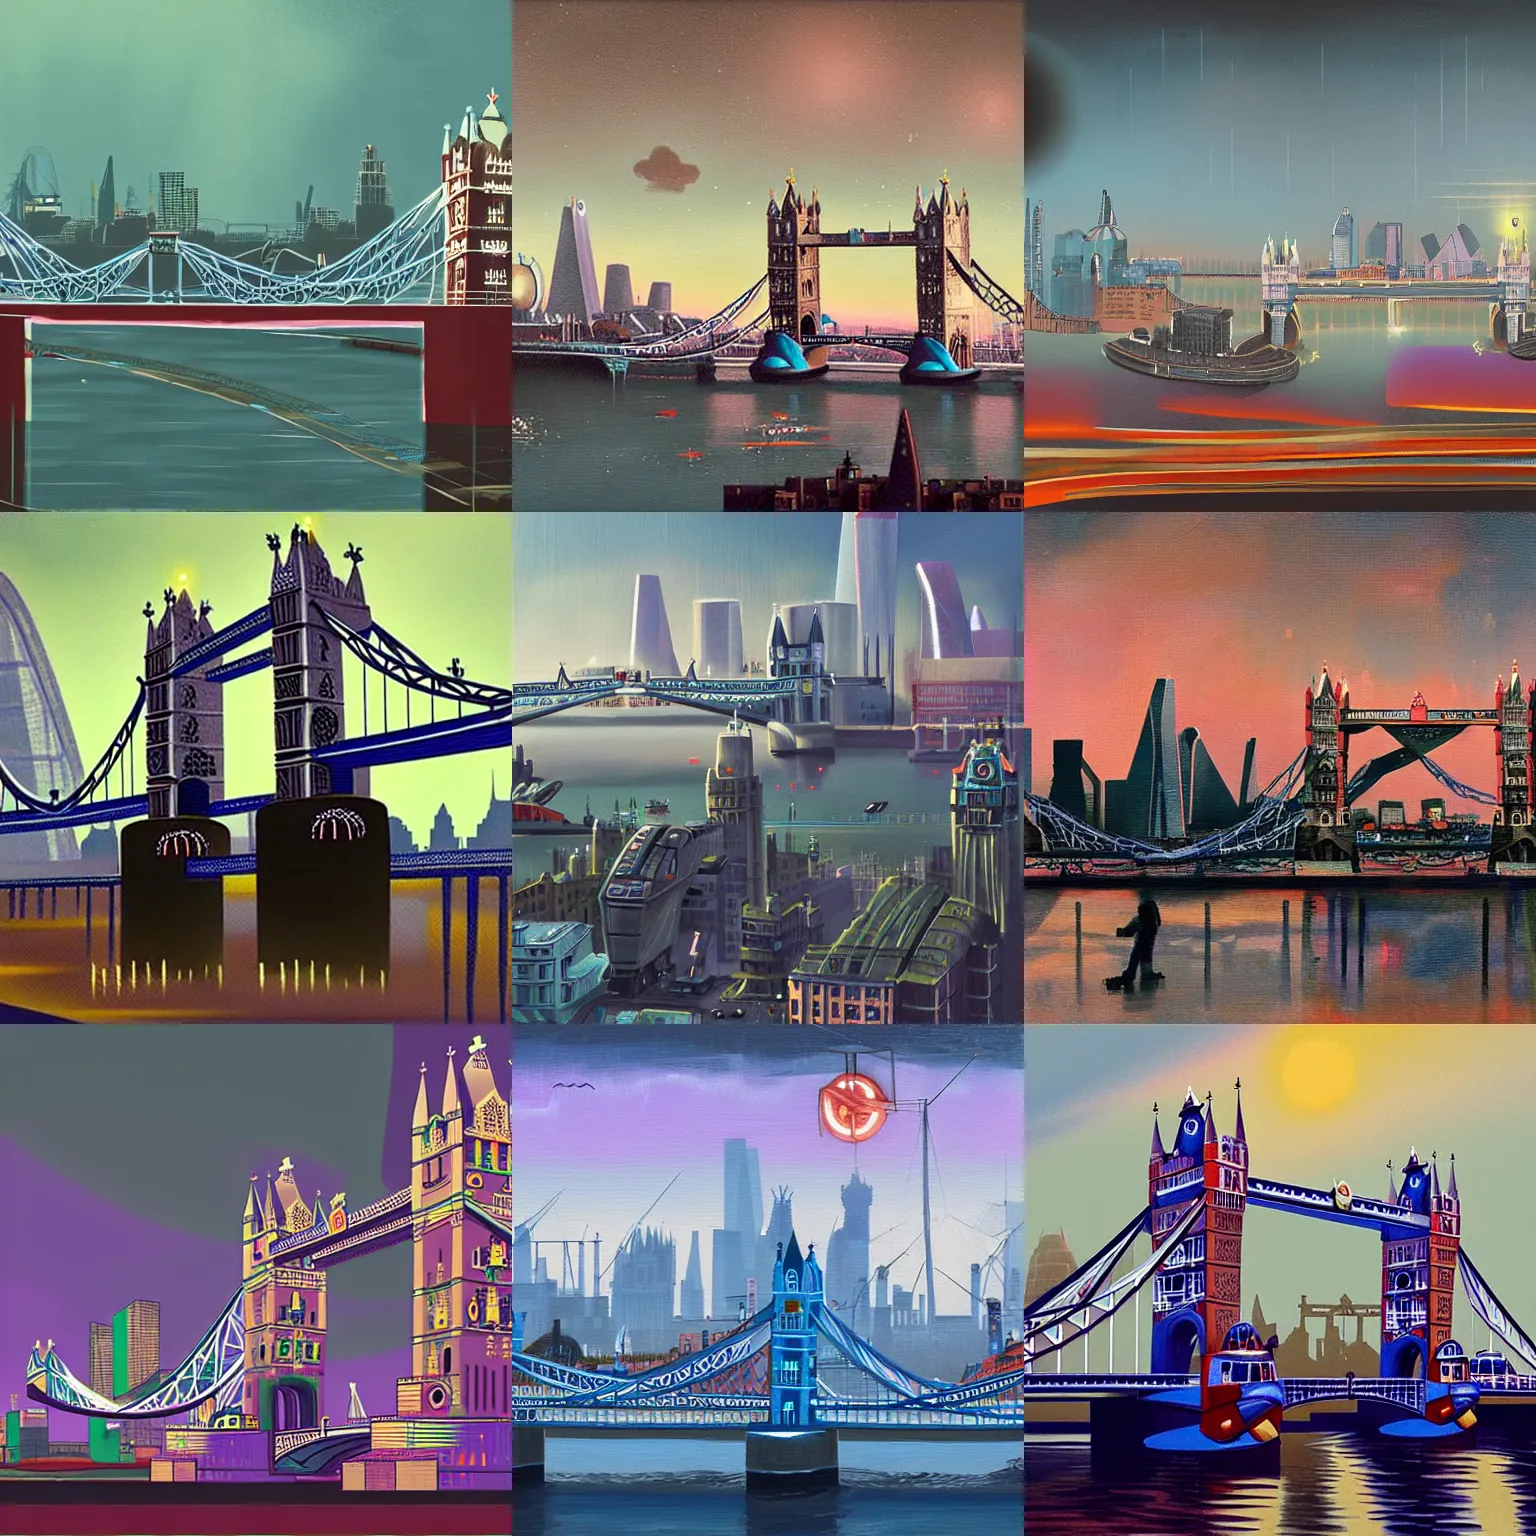 Prompt: London skyline including Tower Bridge, digital sci-fi painting by Simon Stålenhag